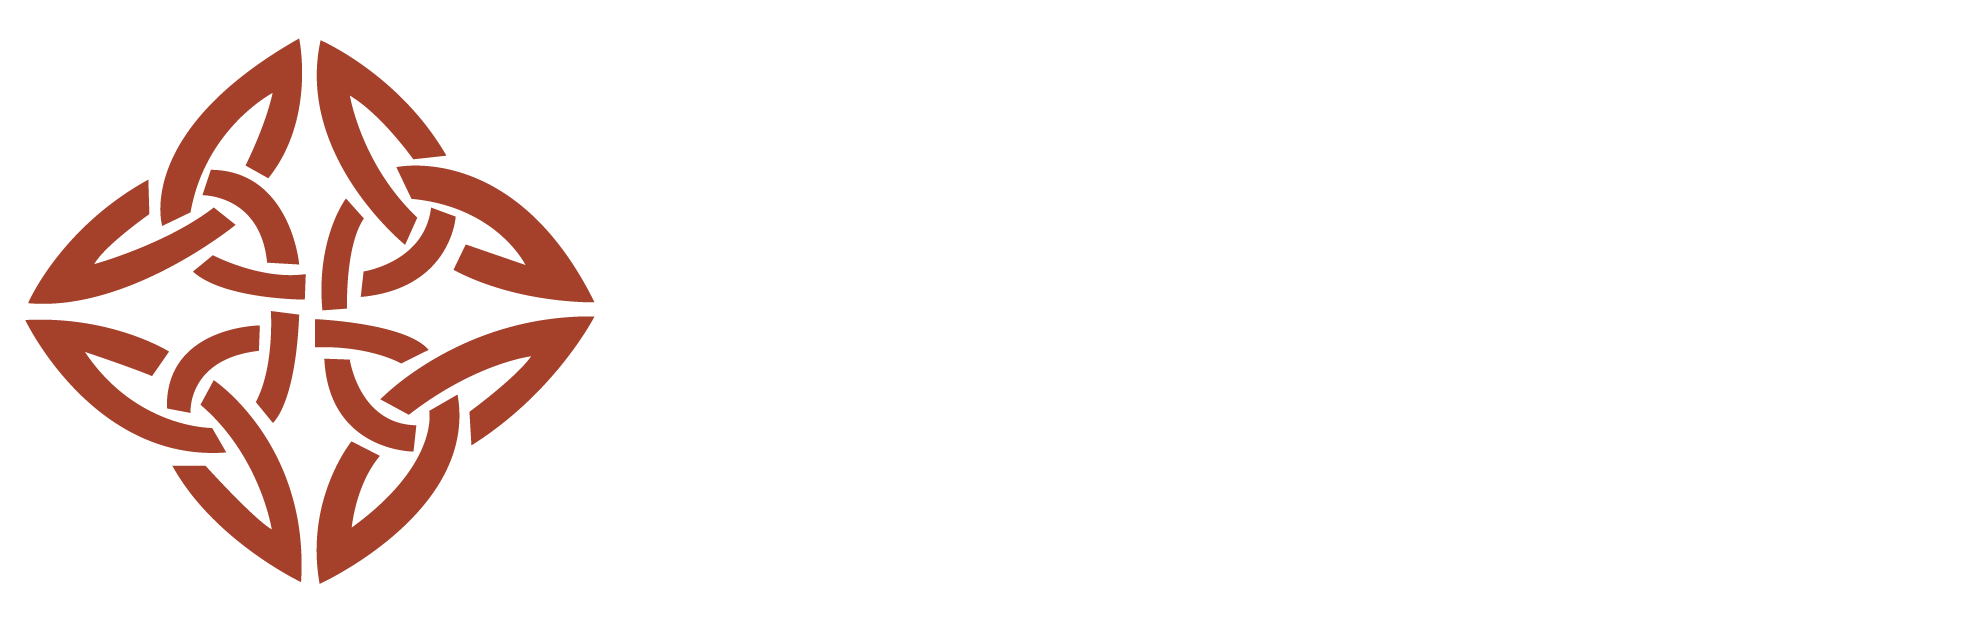 Hotel kasdar|Inn|Accomodation